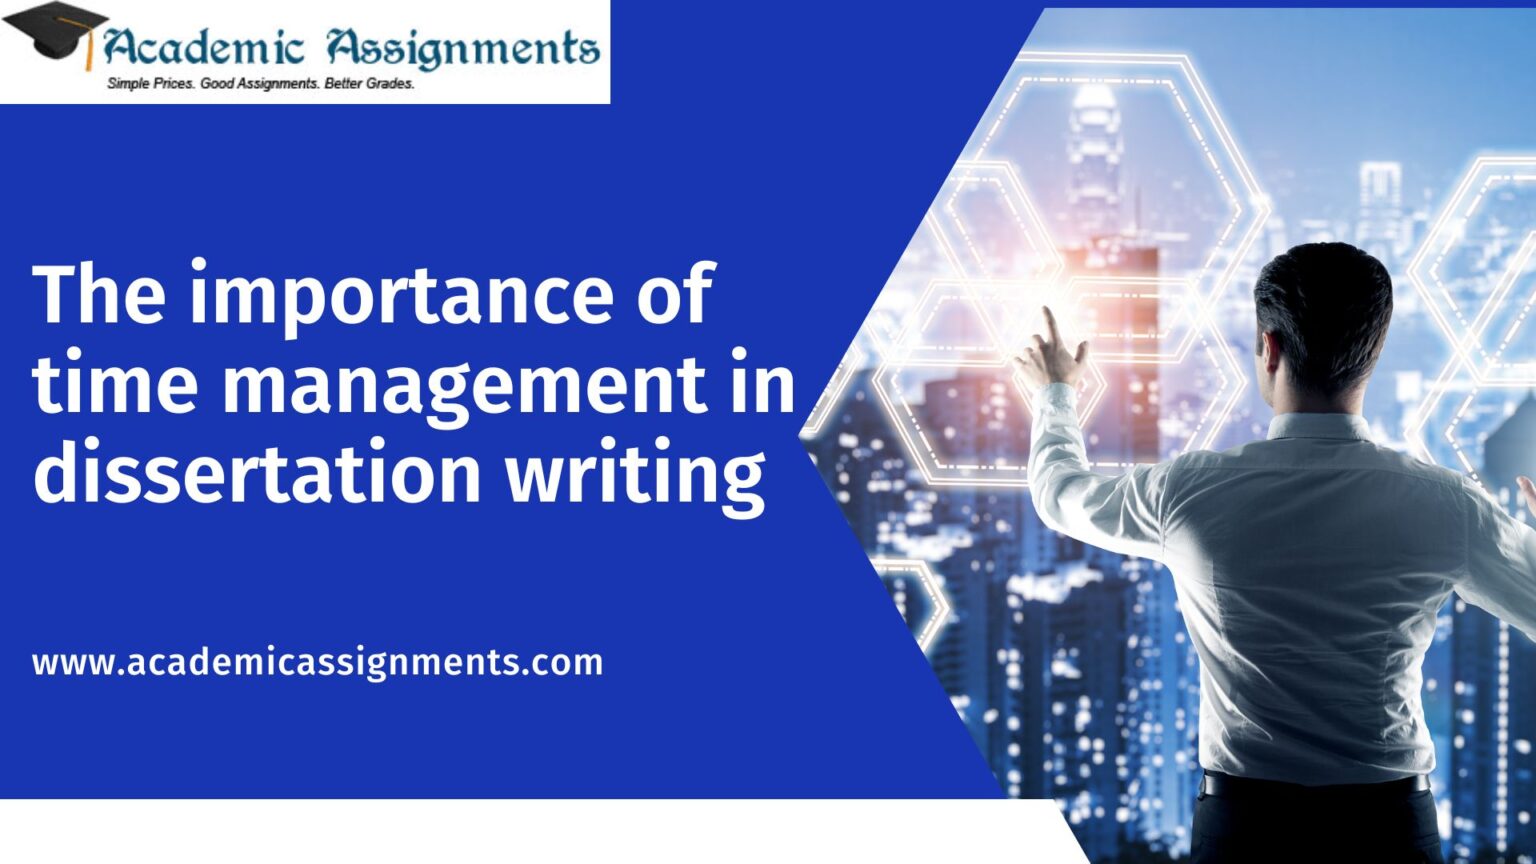 time management writing dissertation